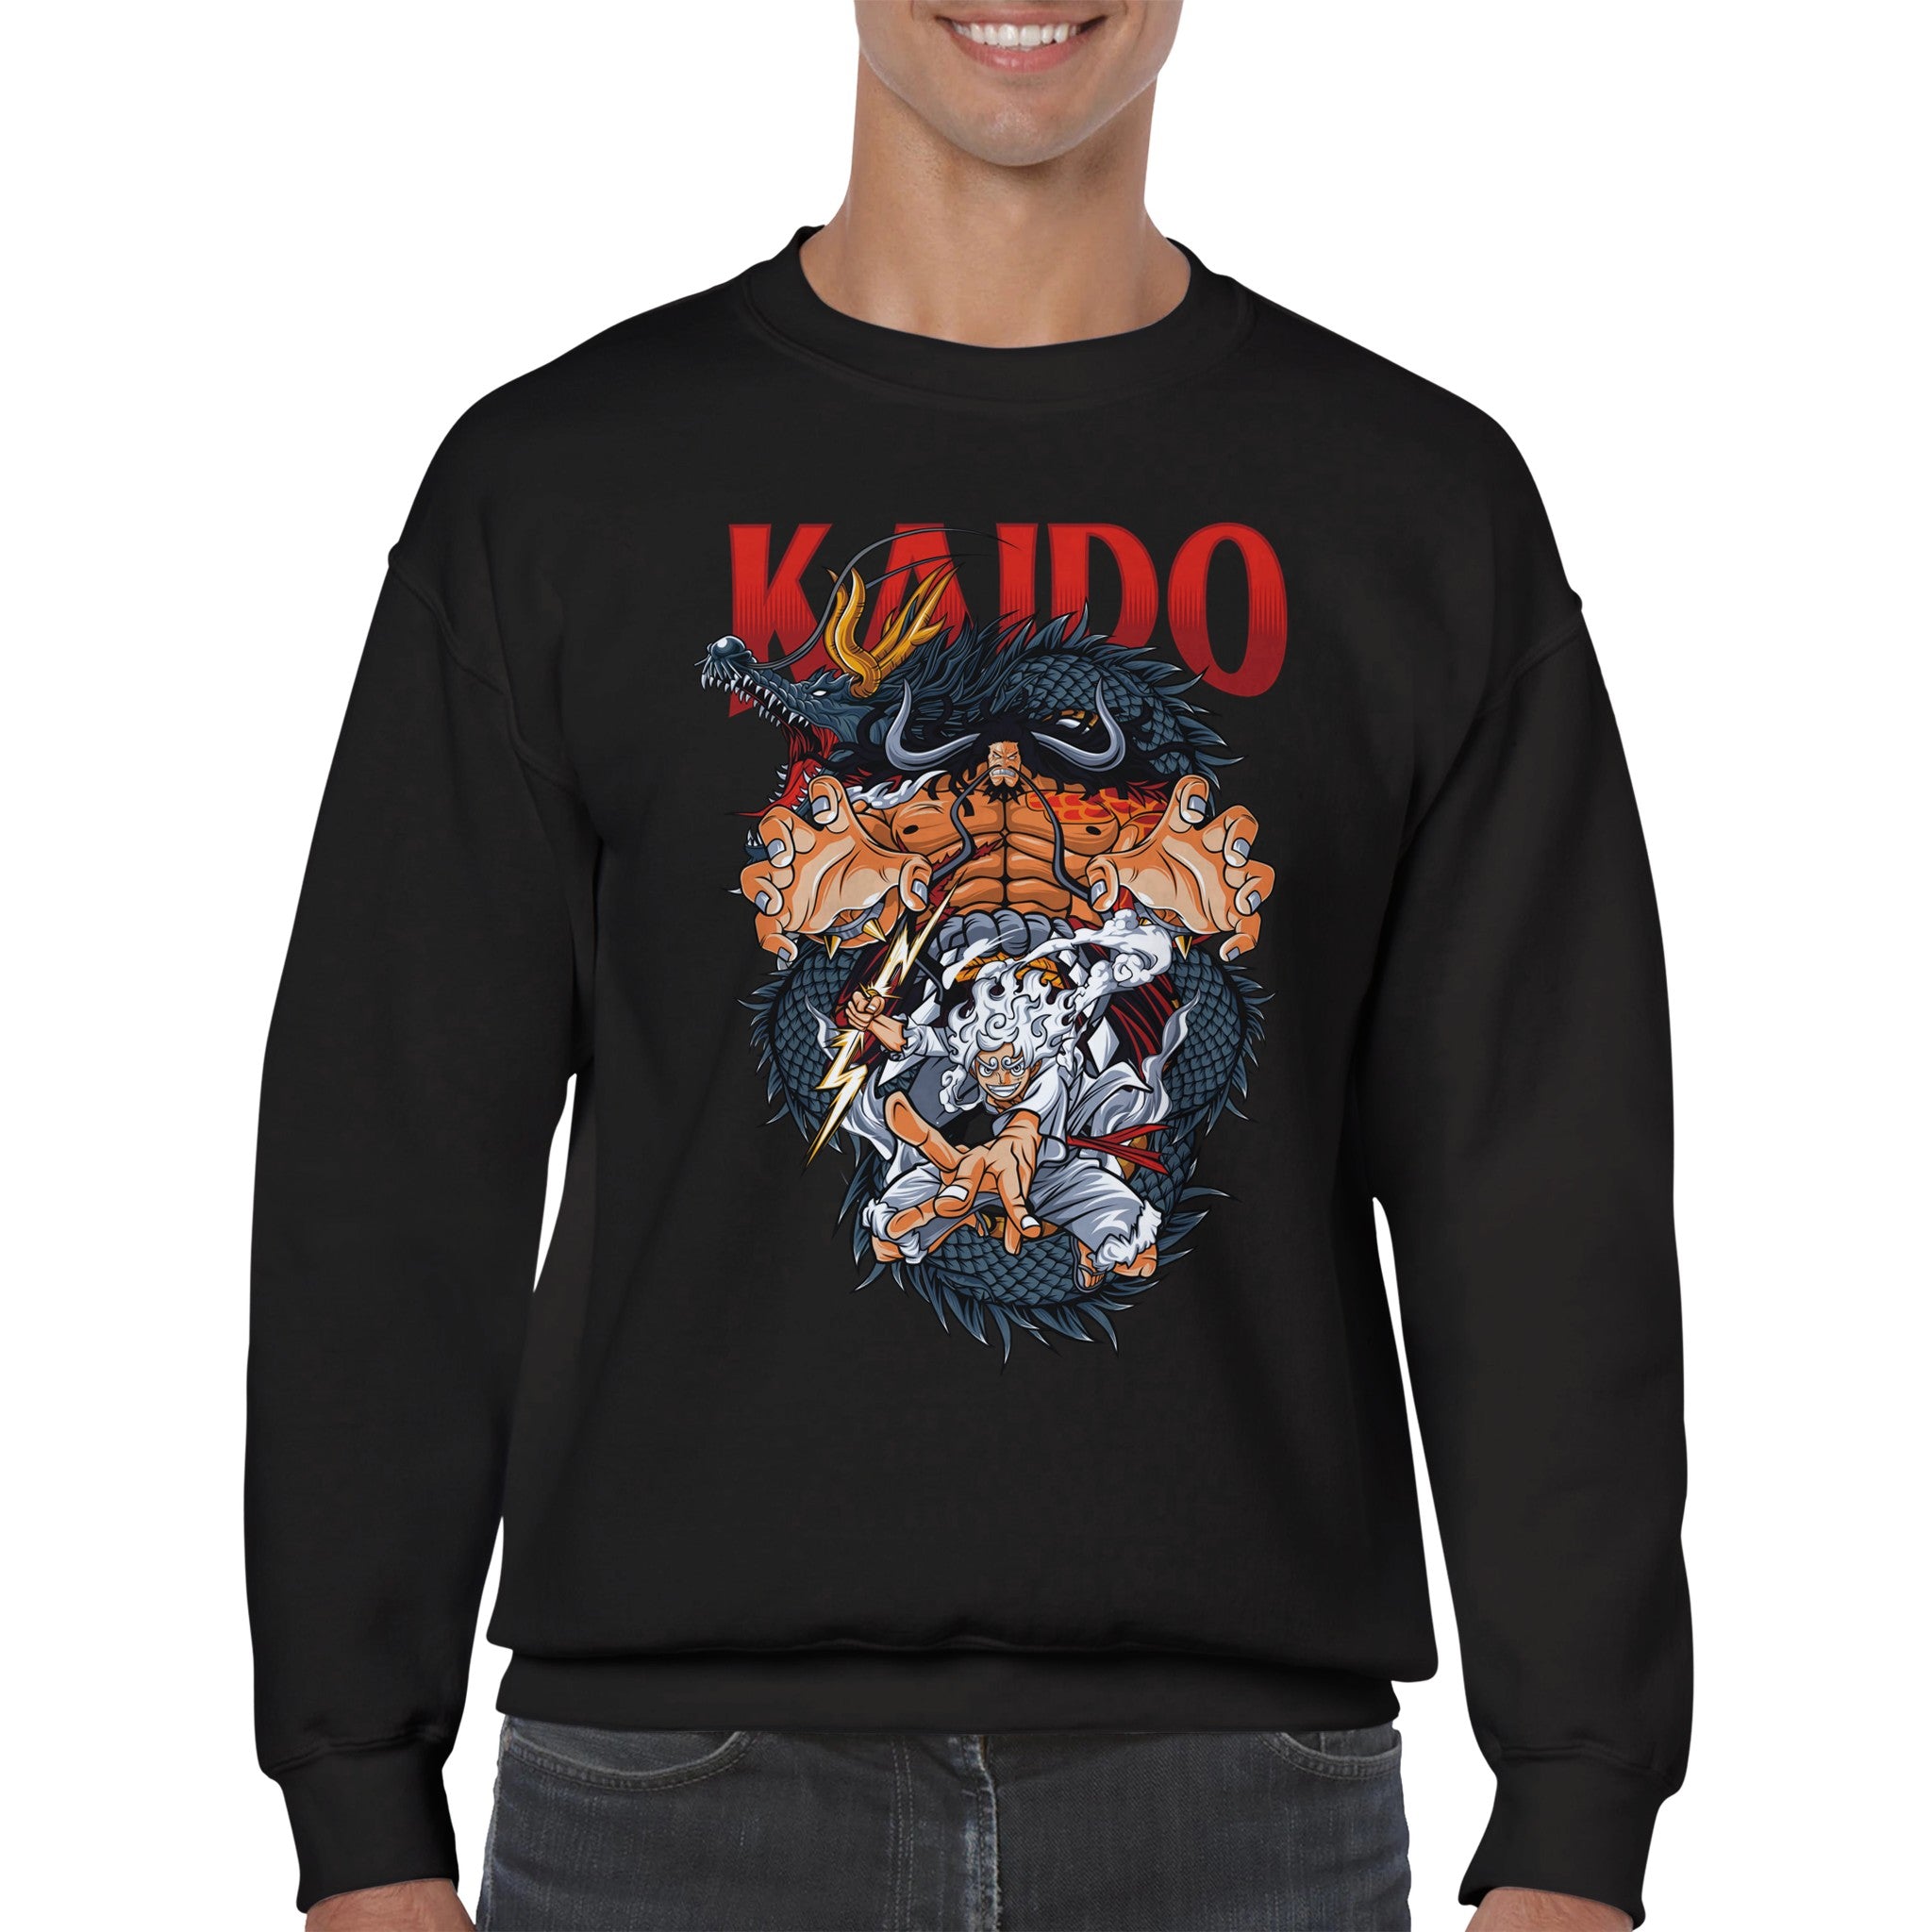 shop and buy one piece anime clothing kaido vs luffy sweatshirt/jumper/longsleeve